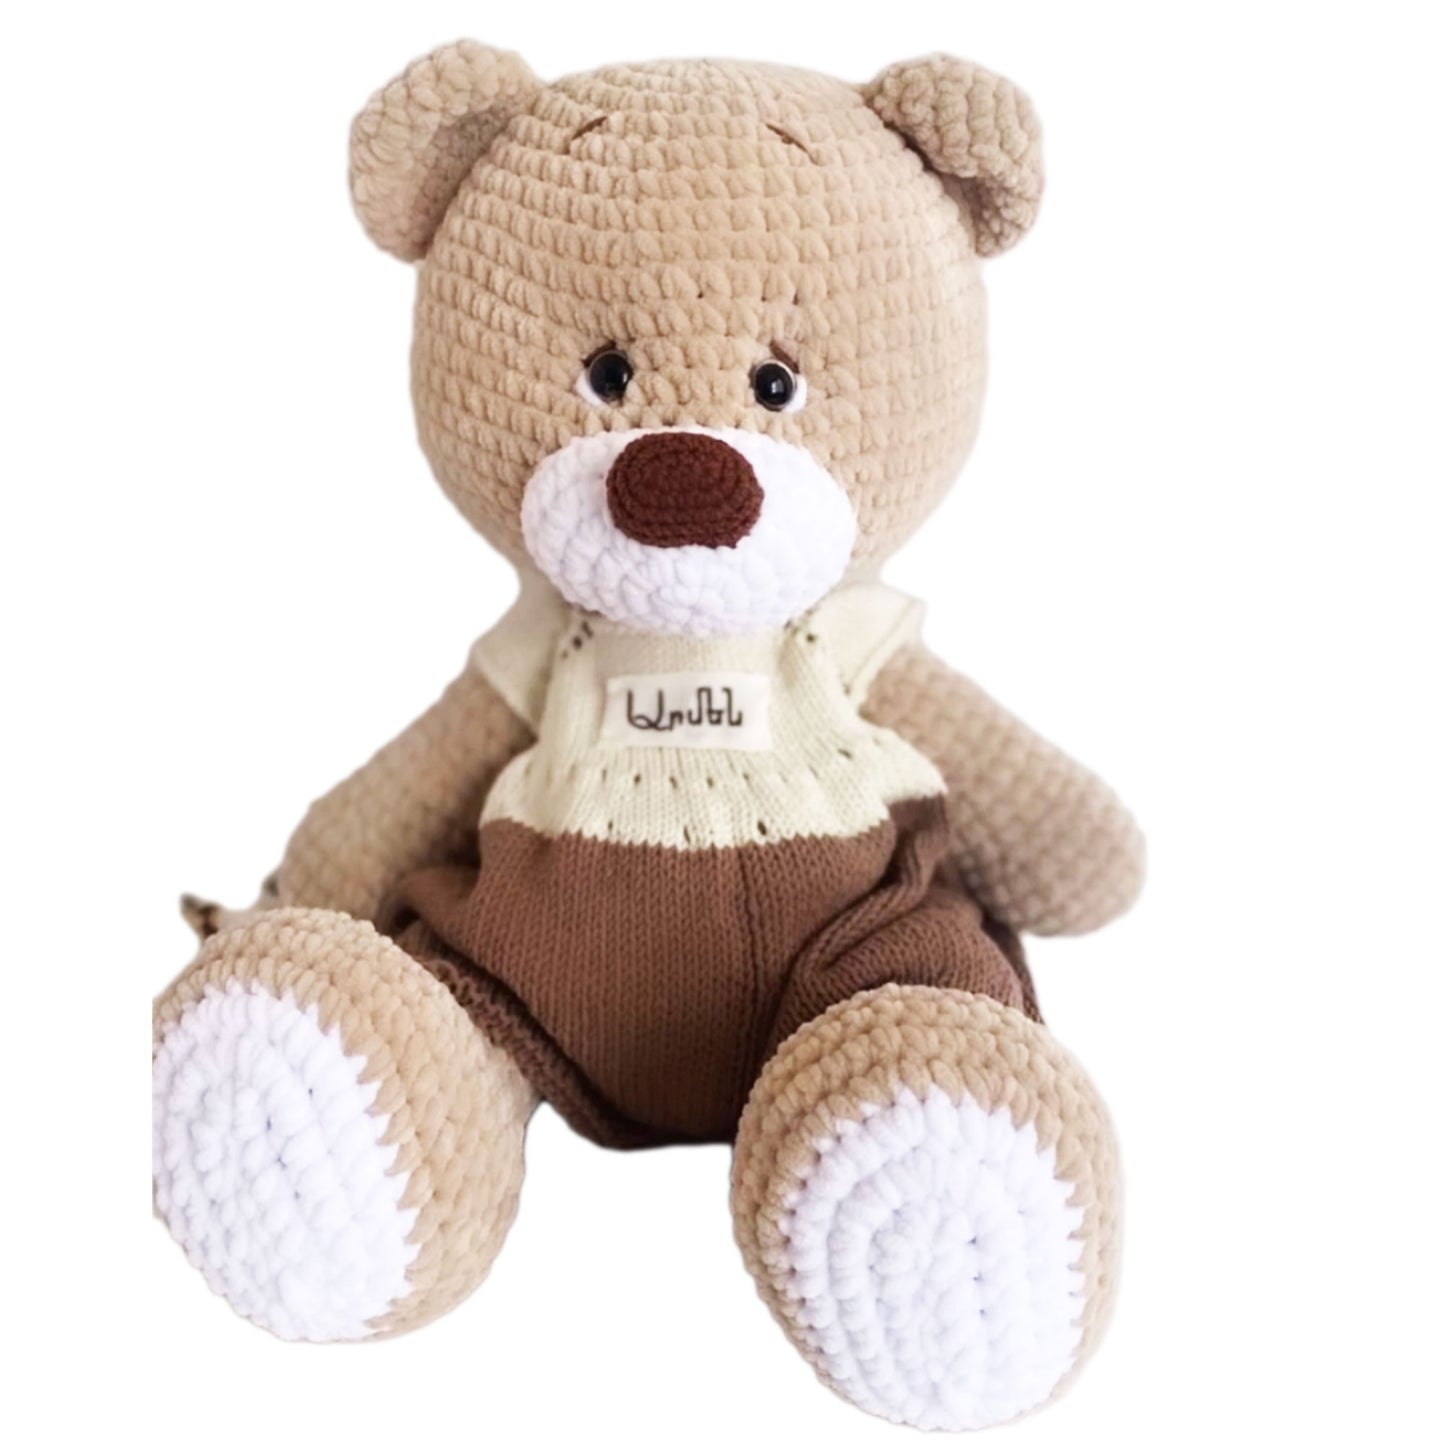 Copy of Large 20" tall Crochet Teddy Bears. Handmade stuffed animal, puppy, knit by hand.